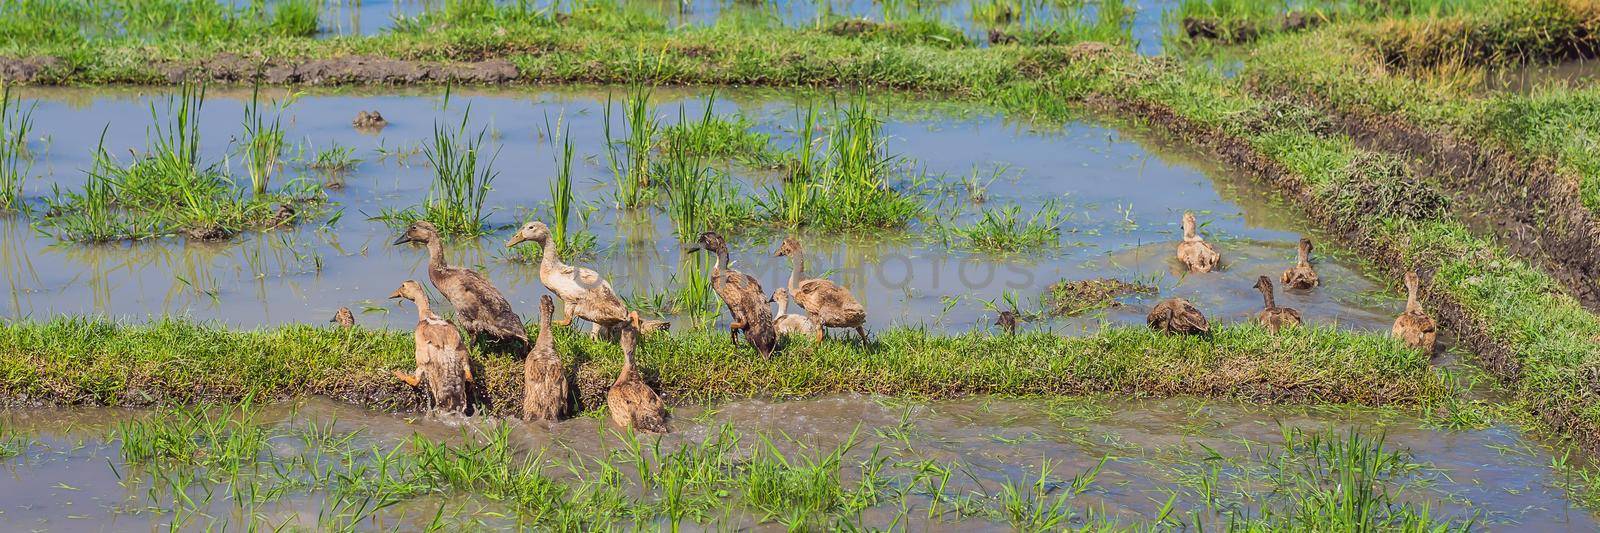 Ducks on a rice field, rural landscape Bali Island, Indonesia BANNER, LONG FORMAT